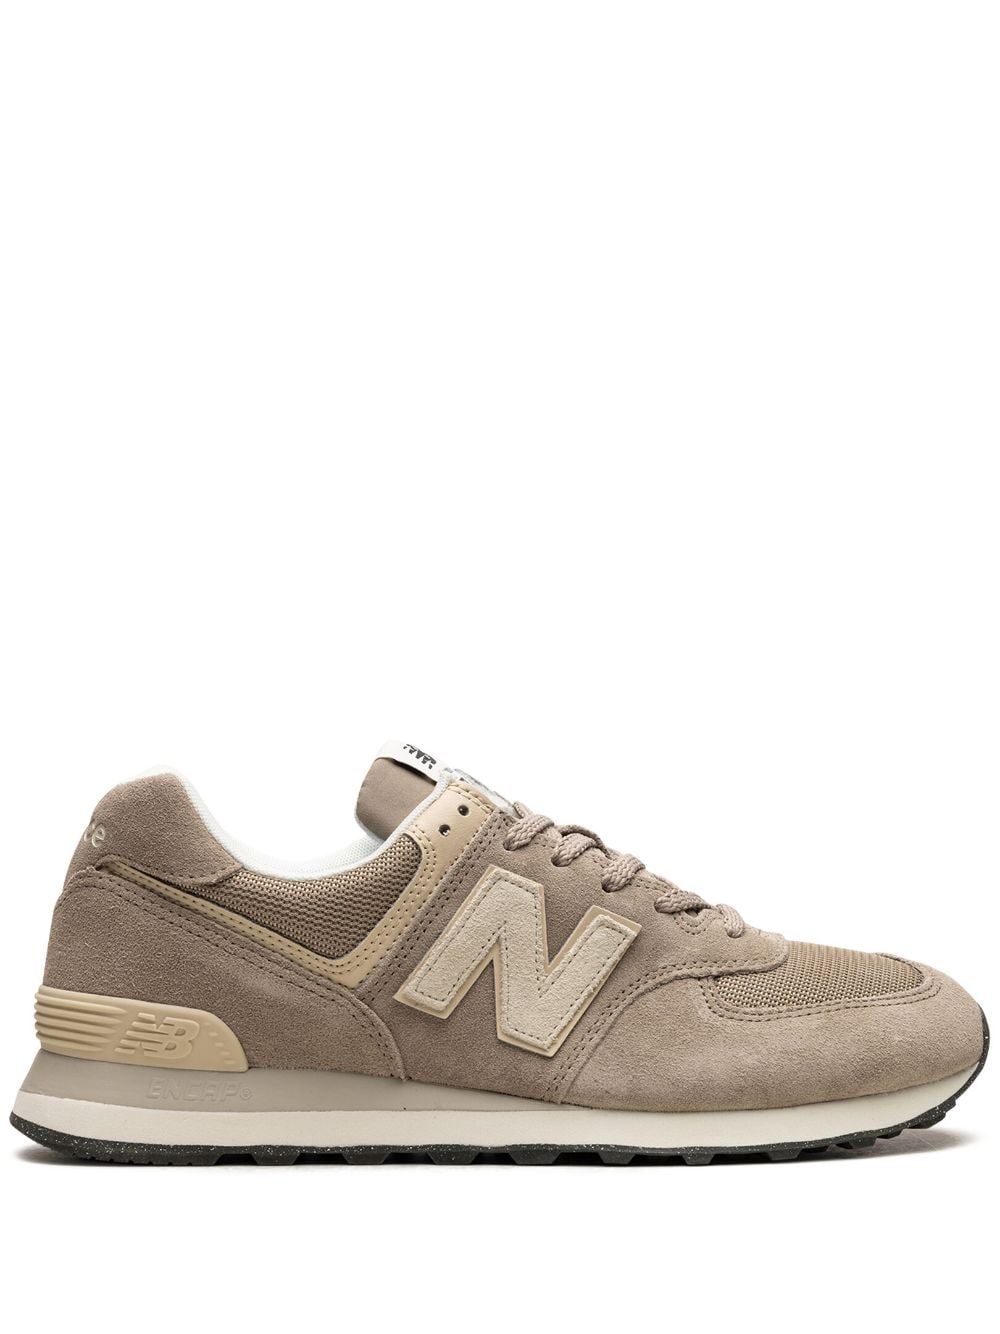 New Balance 574 "Beige/White" sneakers - Neutrals